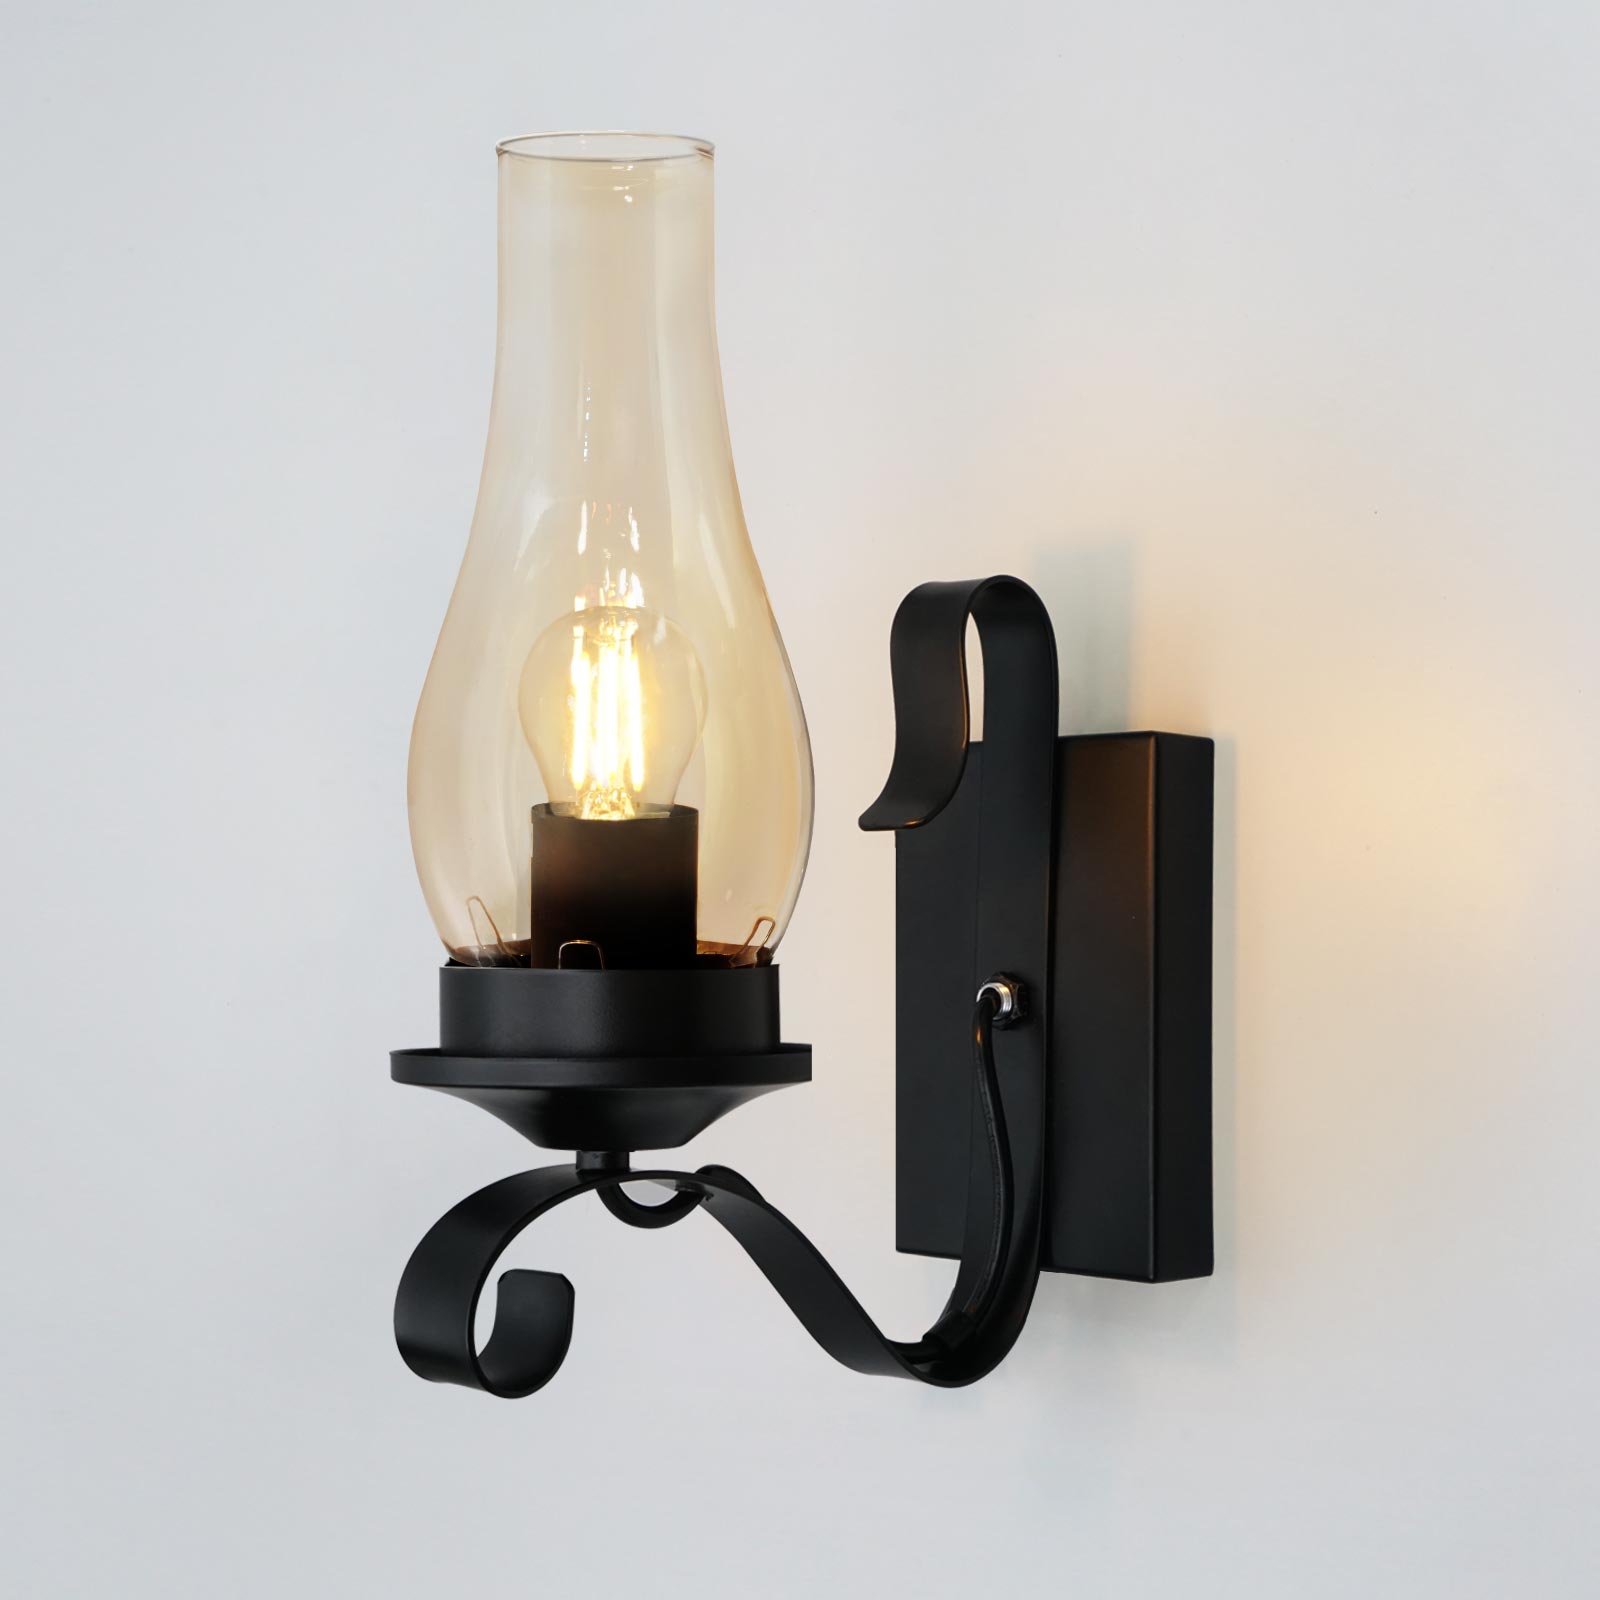 V01 Antique Kerosene Lamps Metal for Outdoor Farmhouse Indoor Bedroom